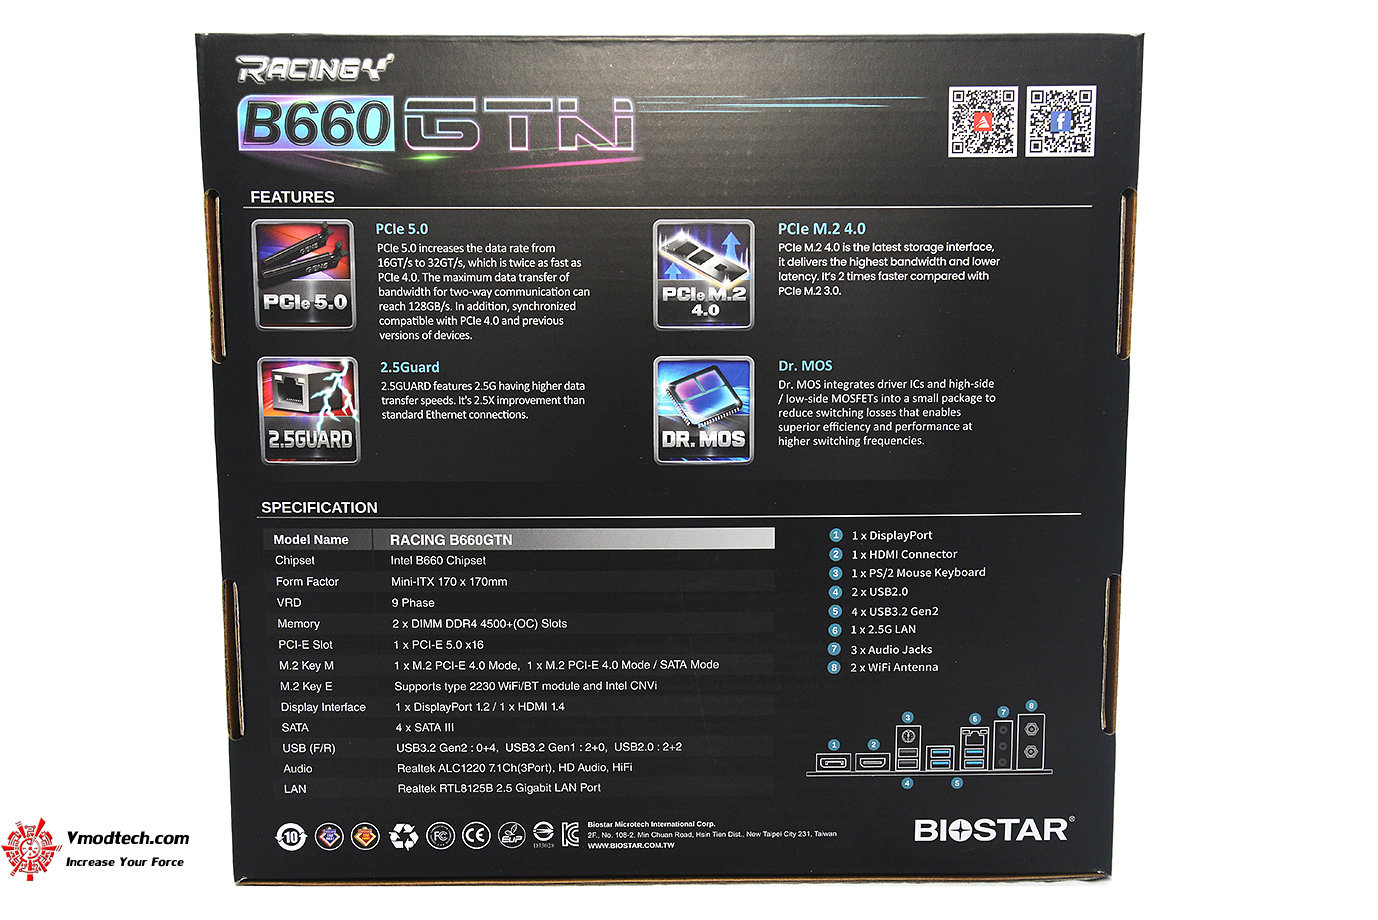 dsc 0942 BIOSTAR RACING B660 GTN REVIEW